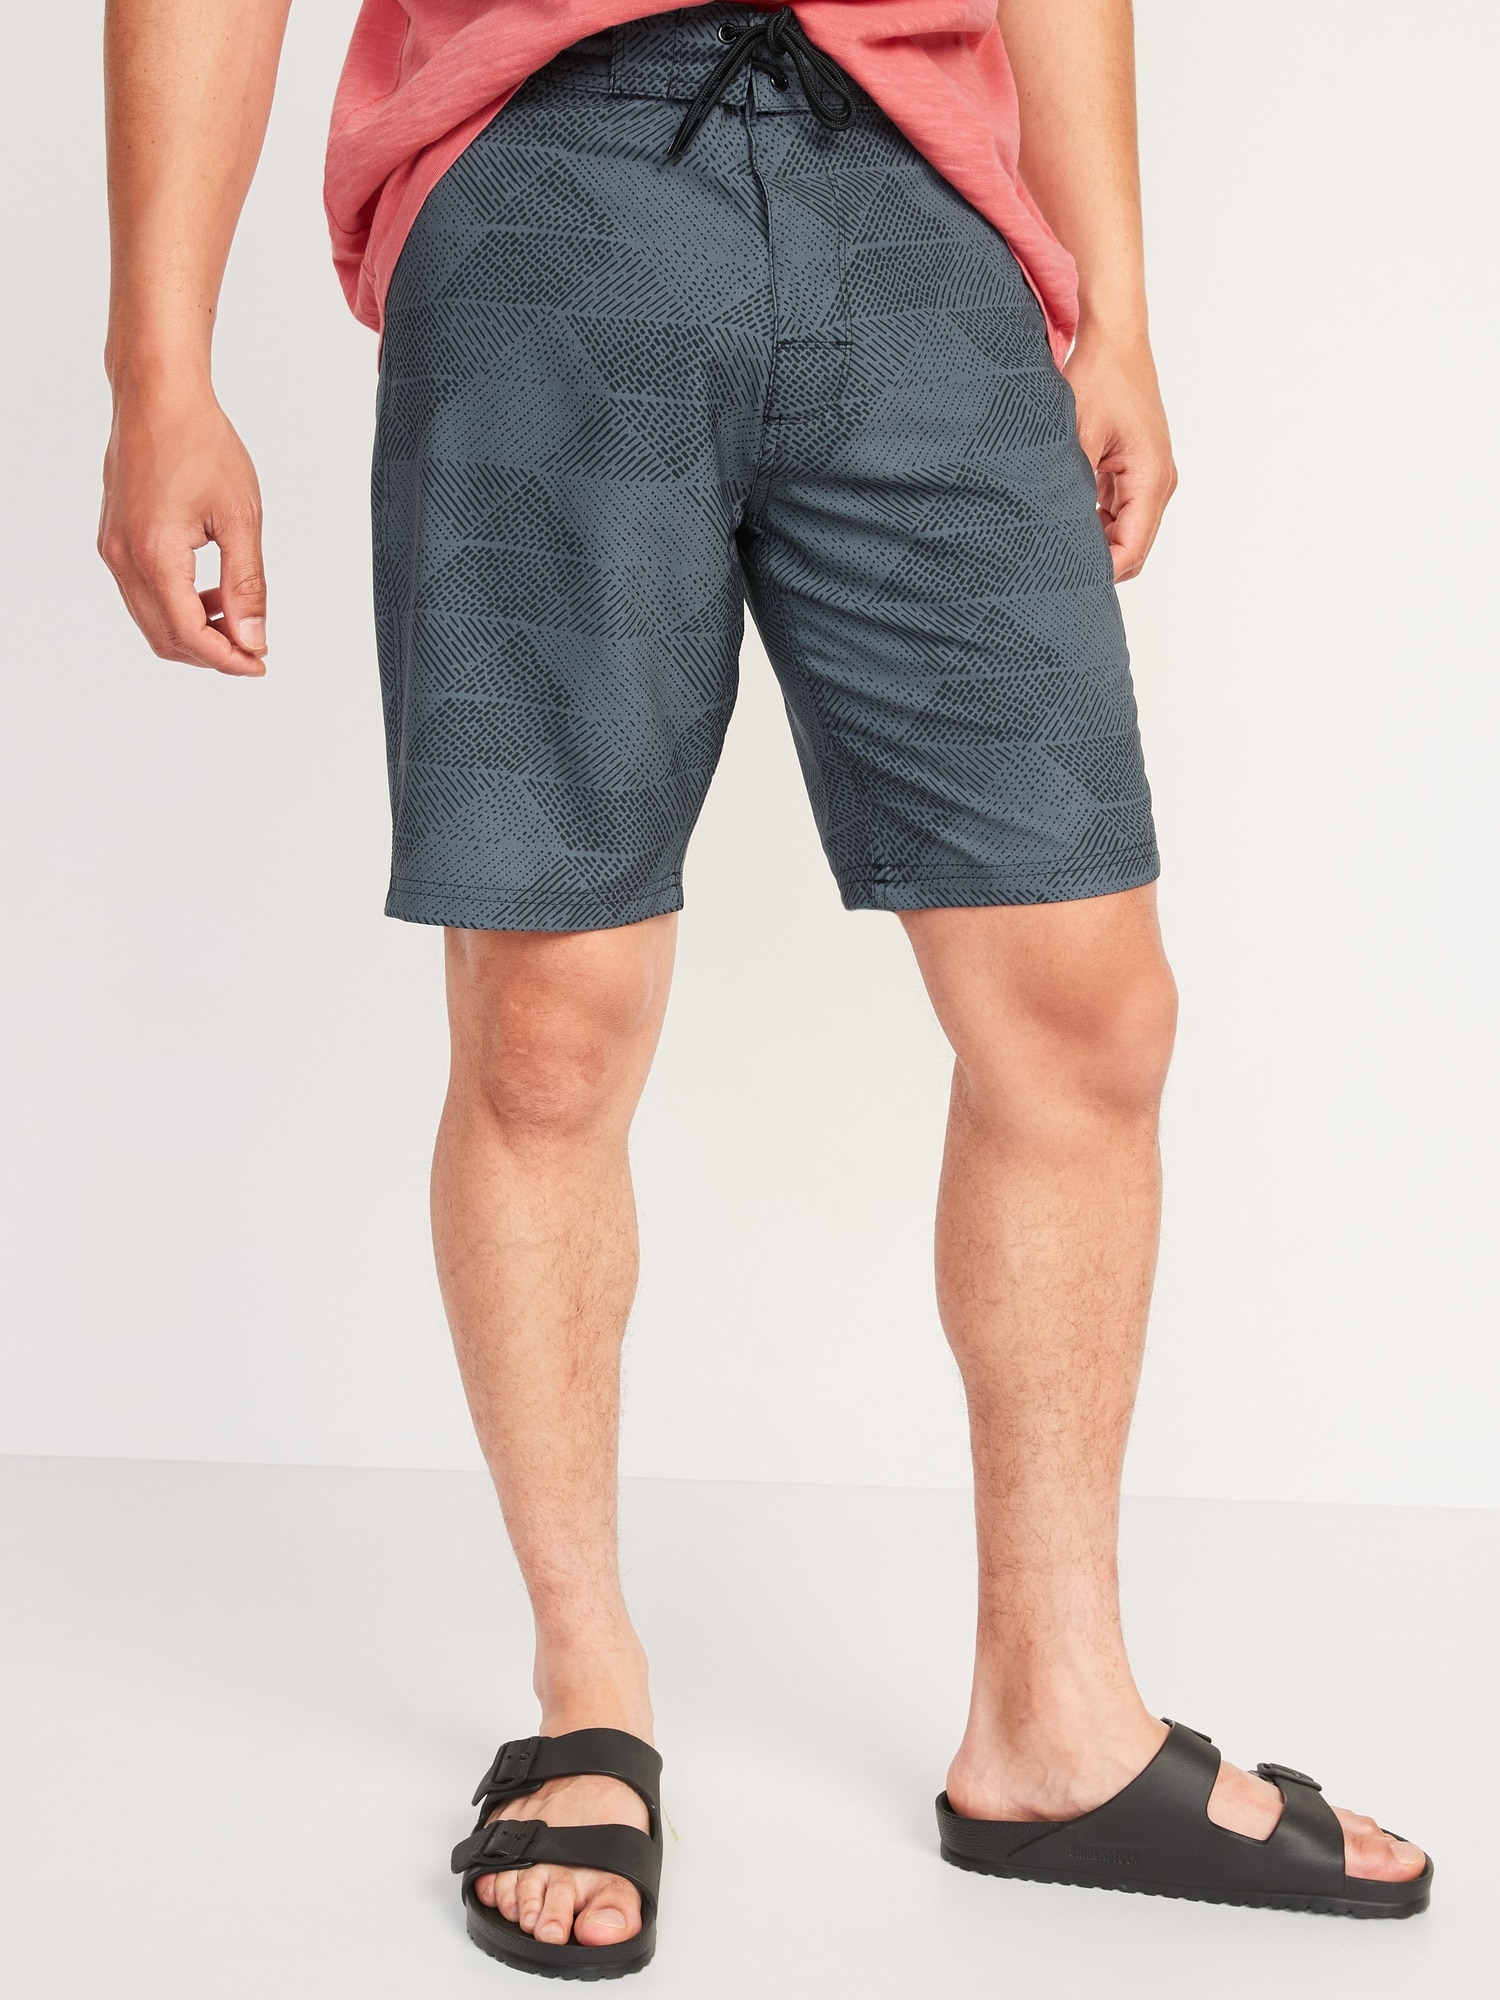 Patterned Built-In Flex Board Shorts for Men -- 10-inch inseam